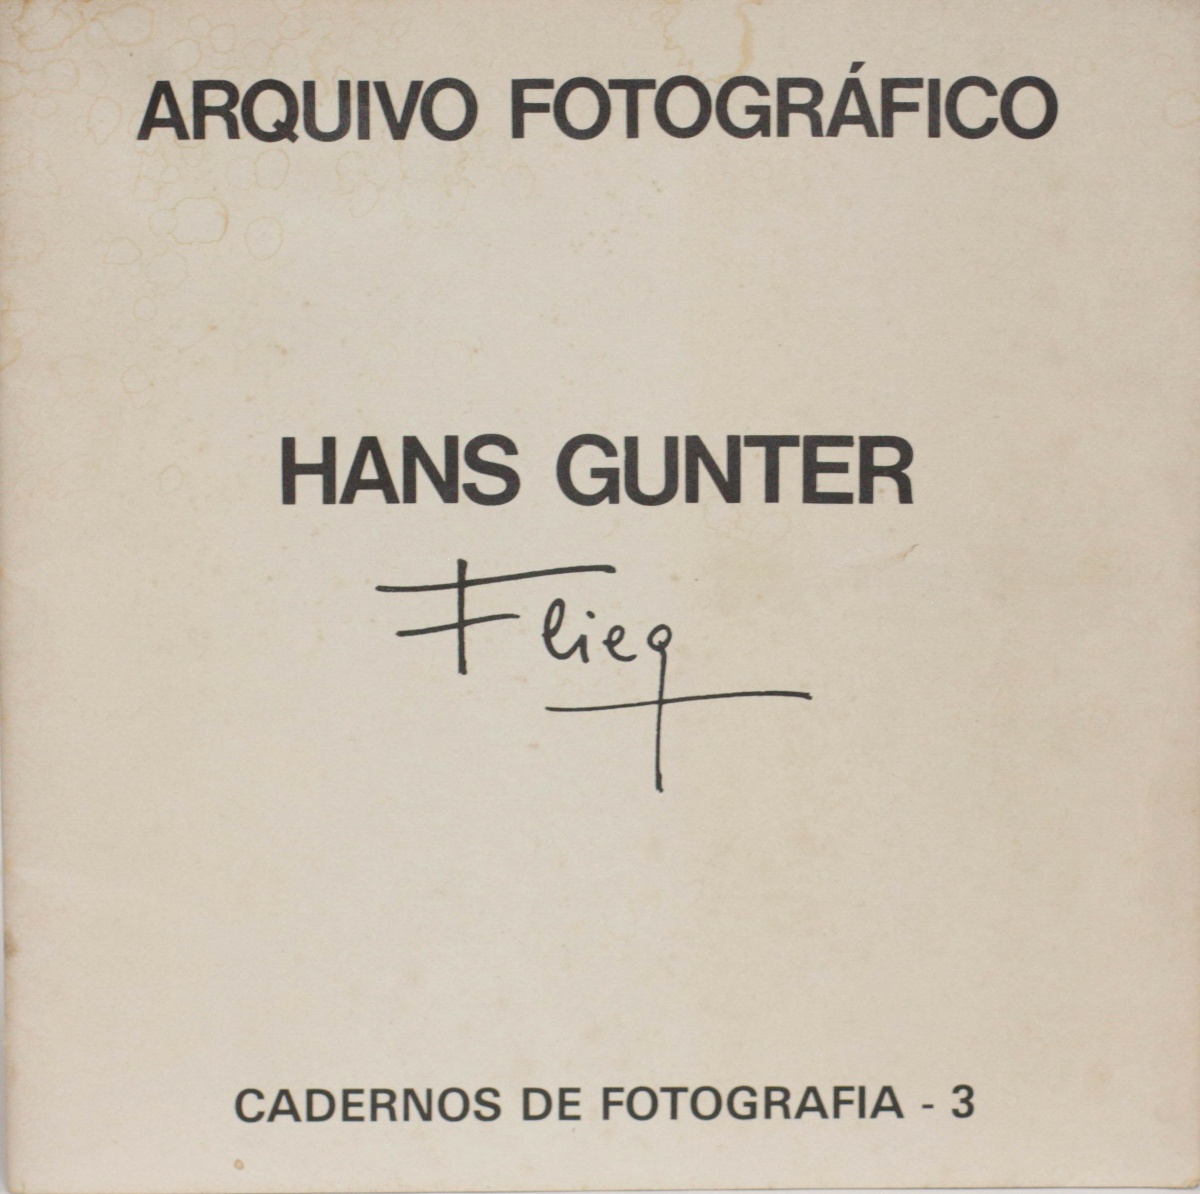 1980-Arquivo Fotografico Hans Gunter Flieg